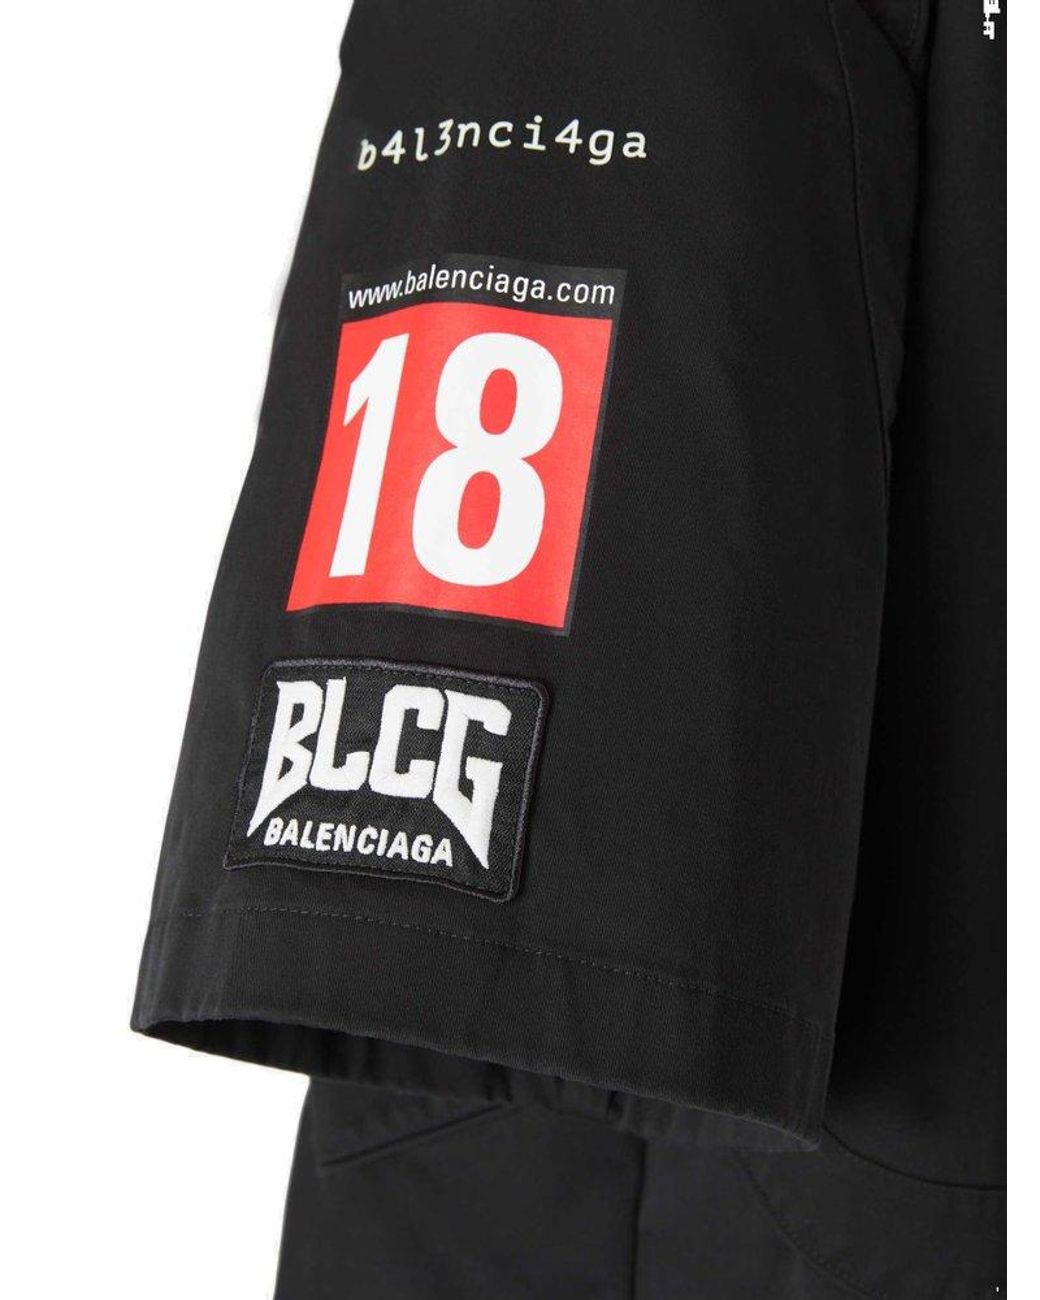 Balenciaga Gamer Extreme Short Sleeve Cotton Shirt in Black 38EU= M US